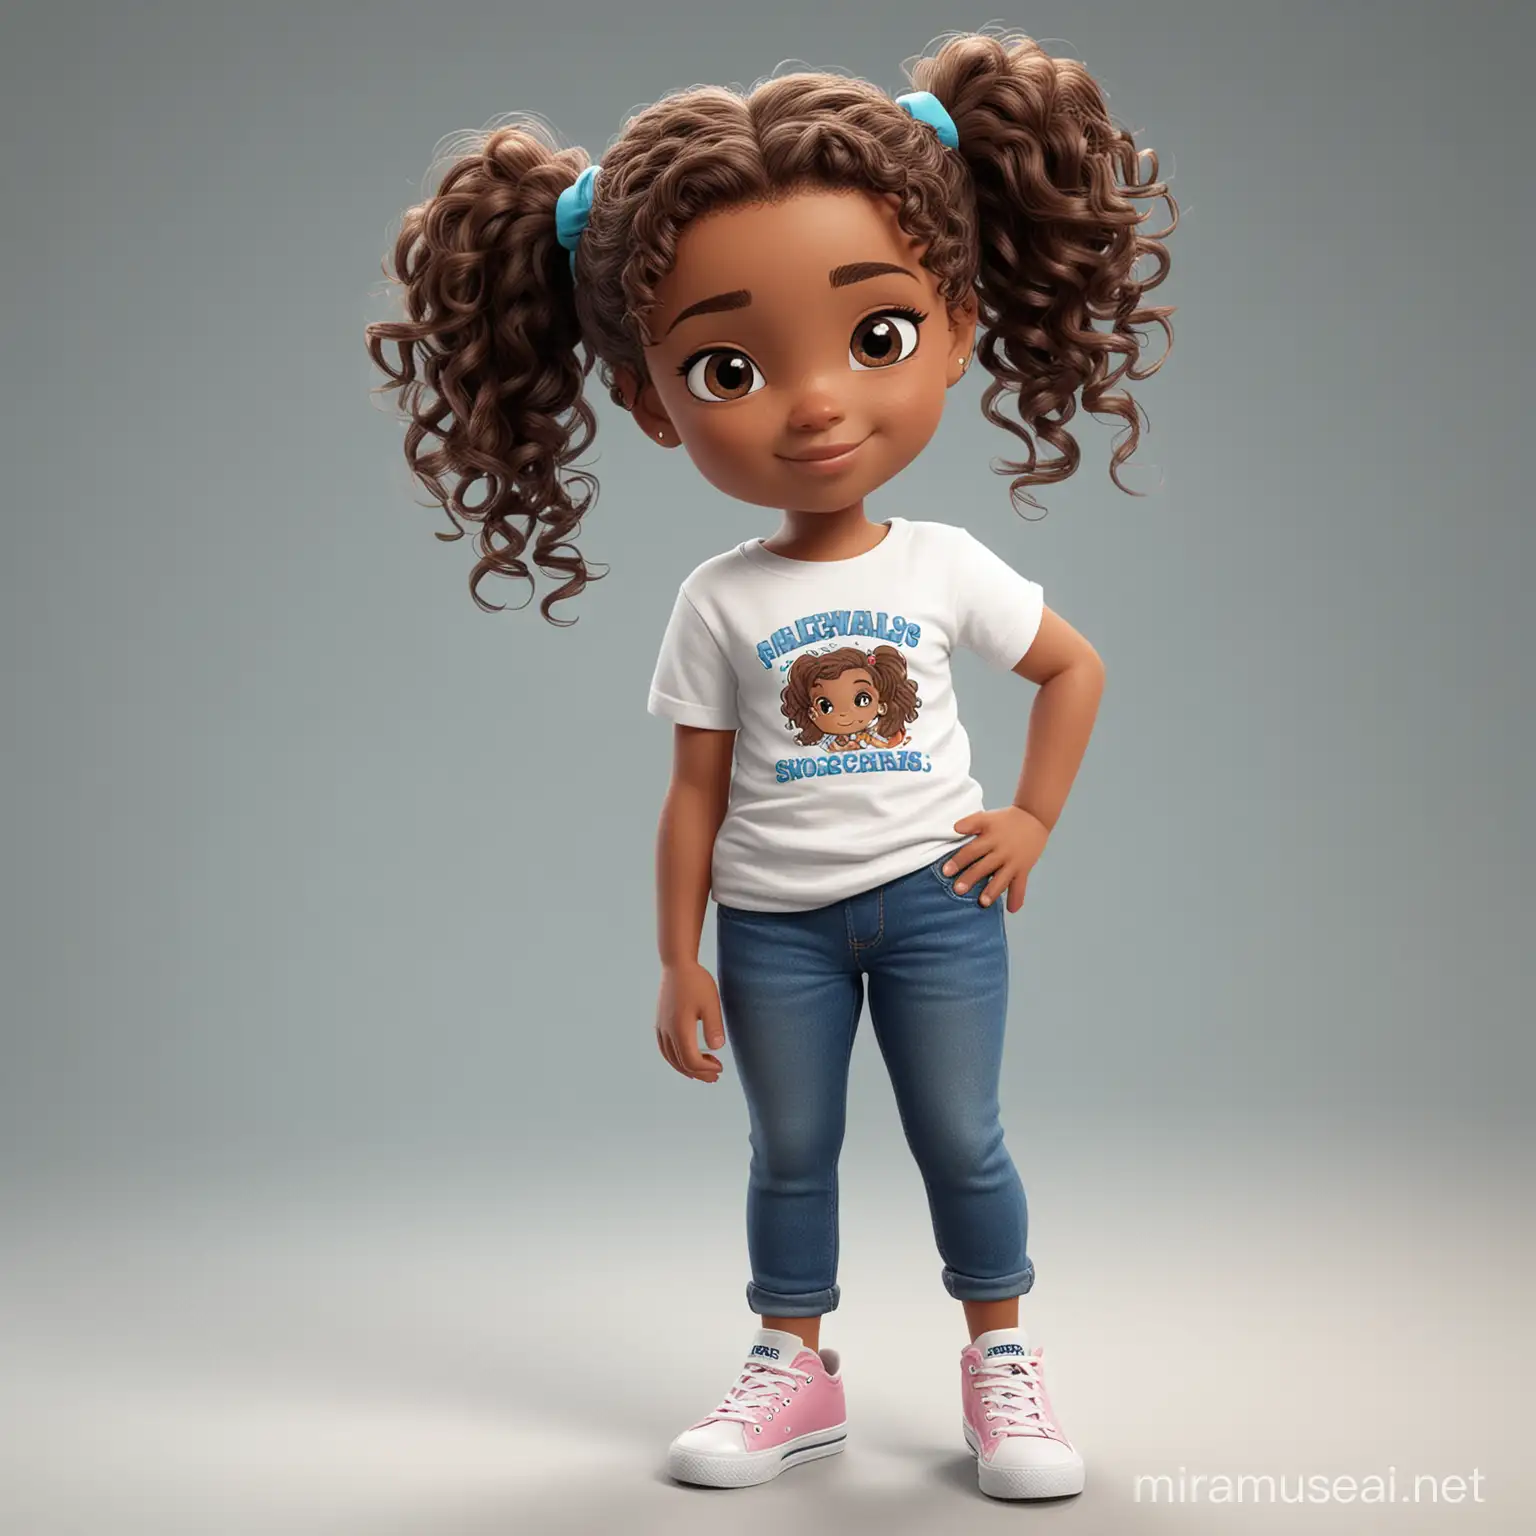 Energetic AfricanAmerican Toddler Girl Named Jalaney Playful Character Illustration